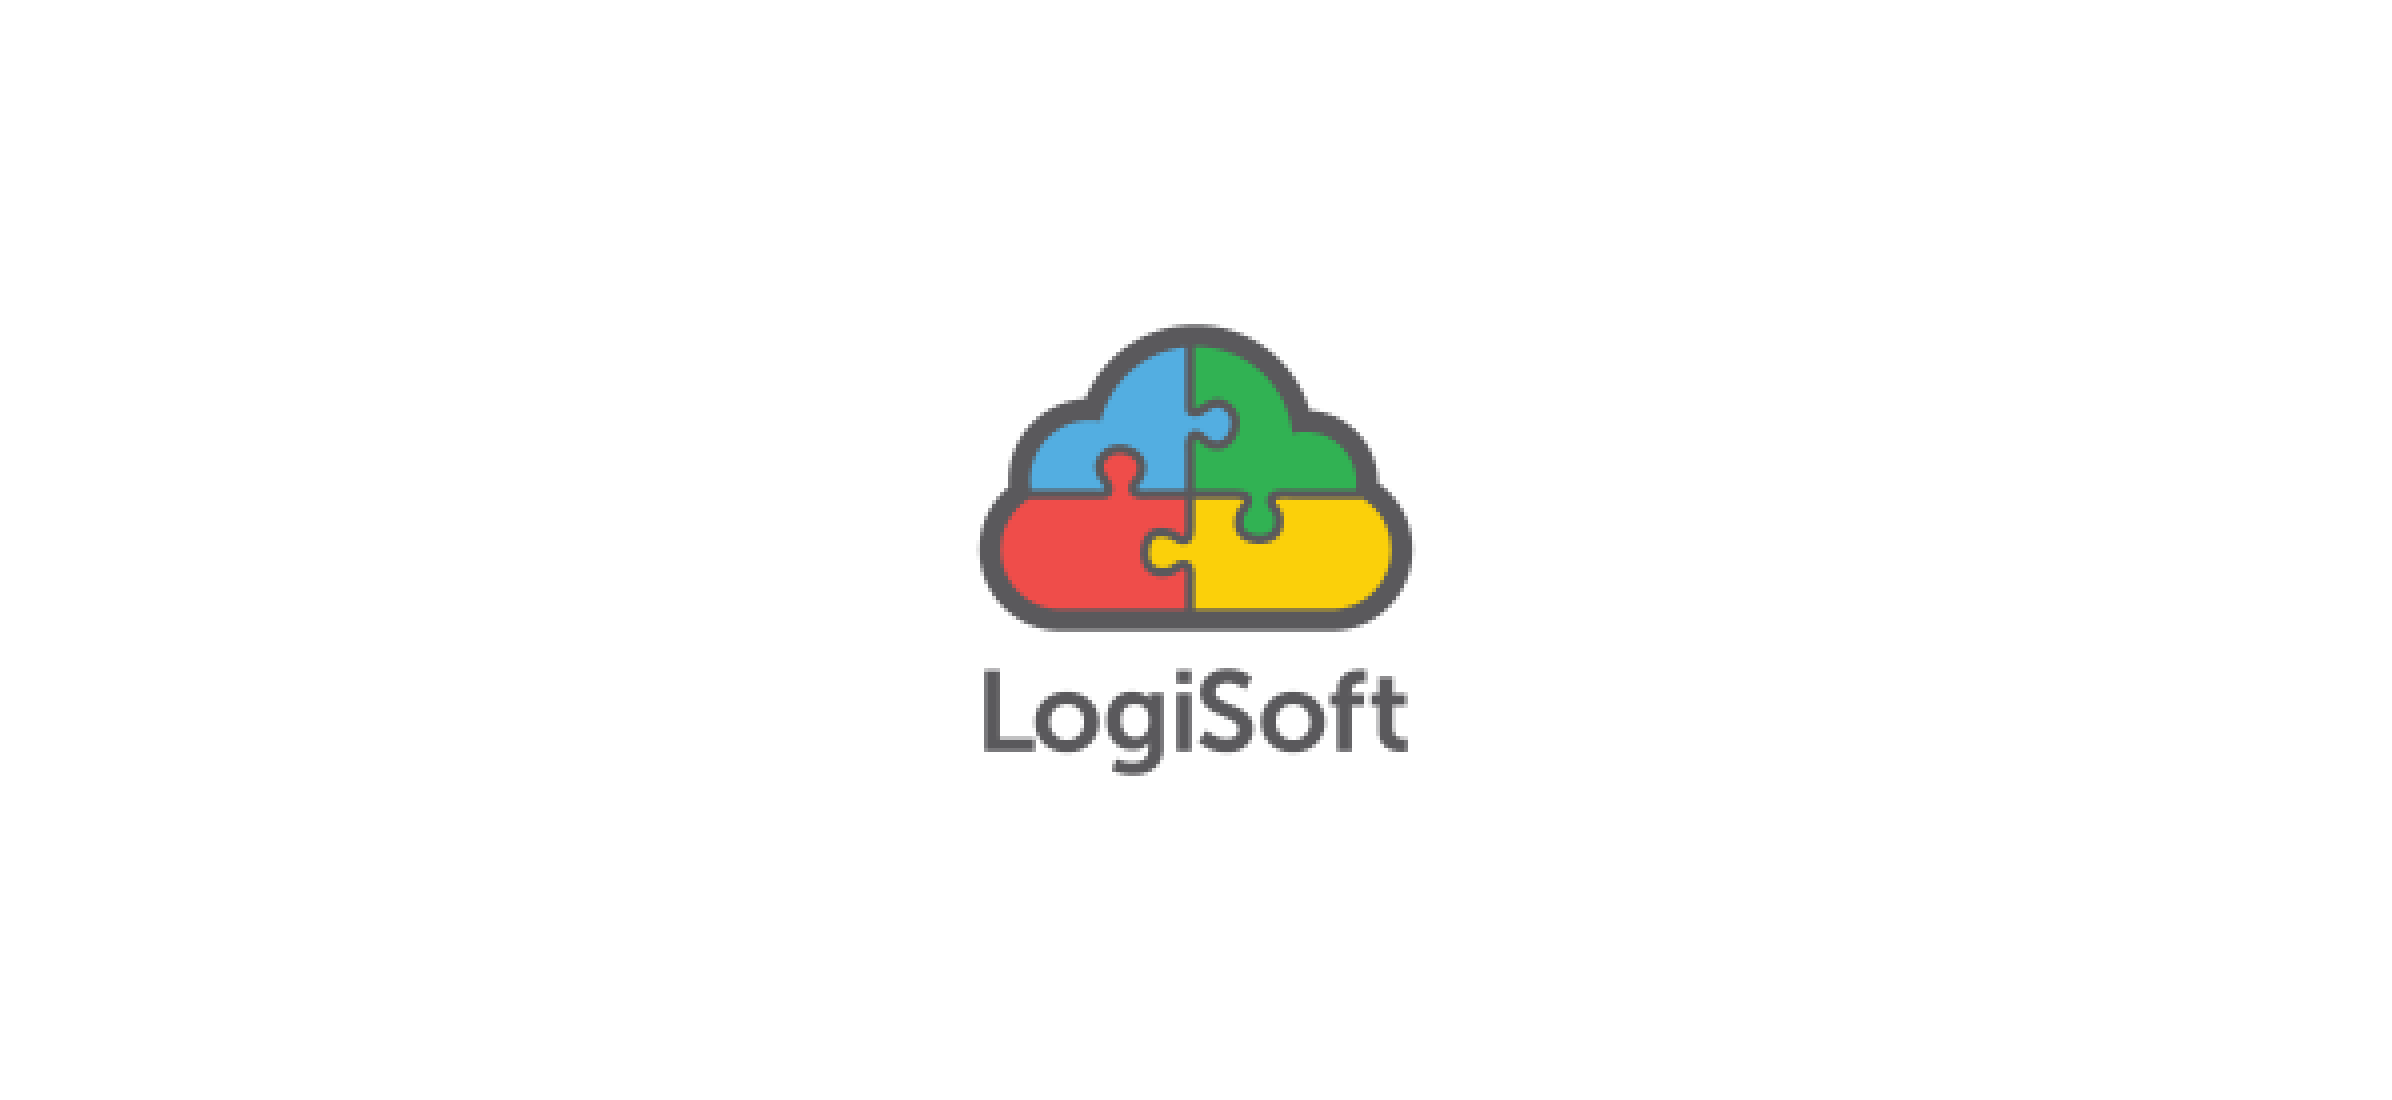 The Logisoft logo